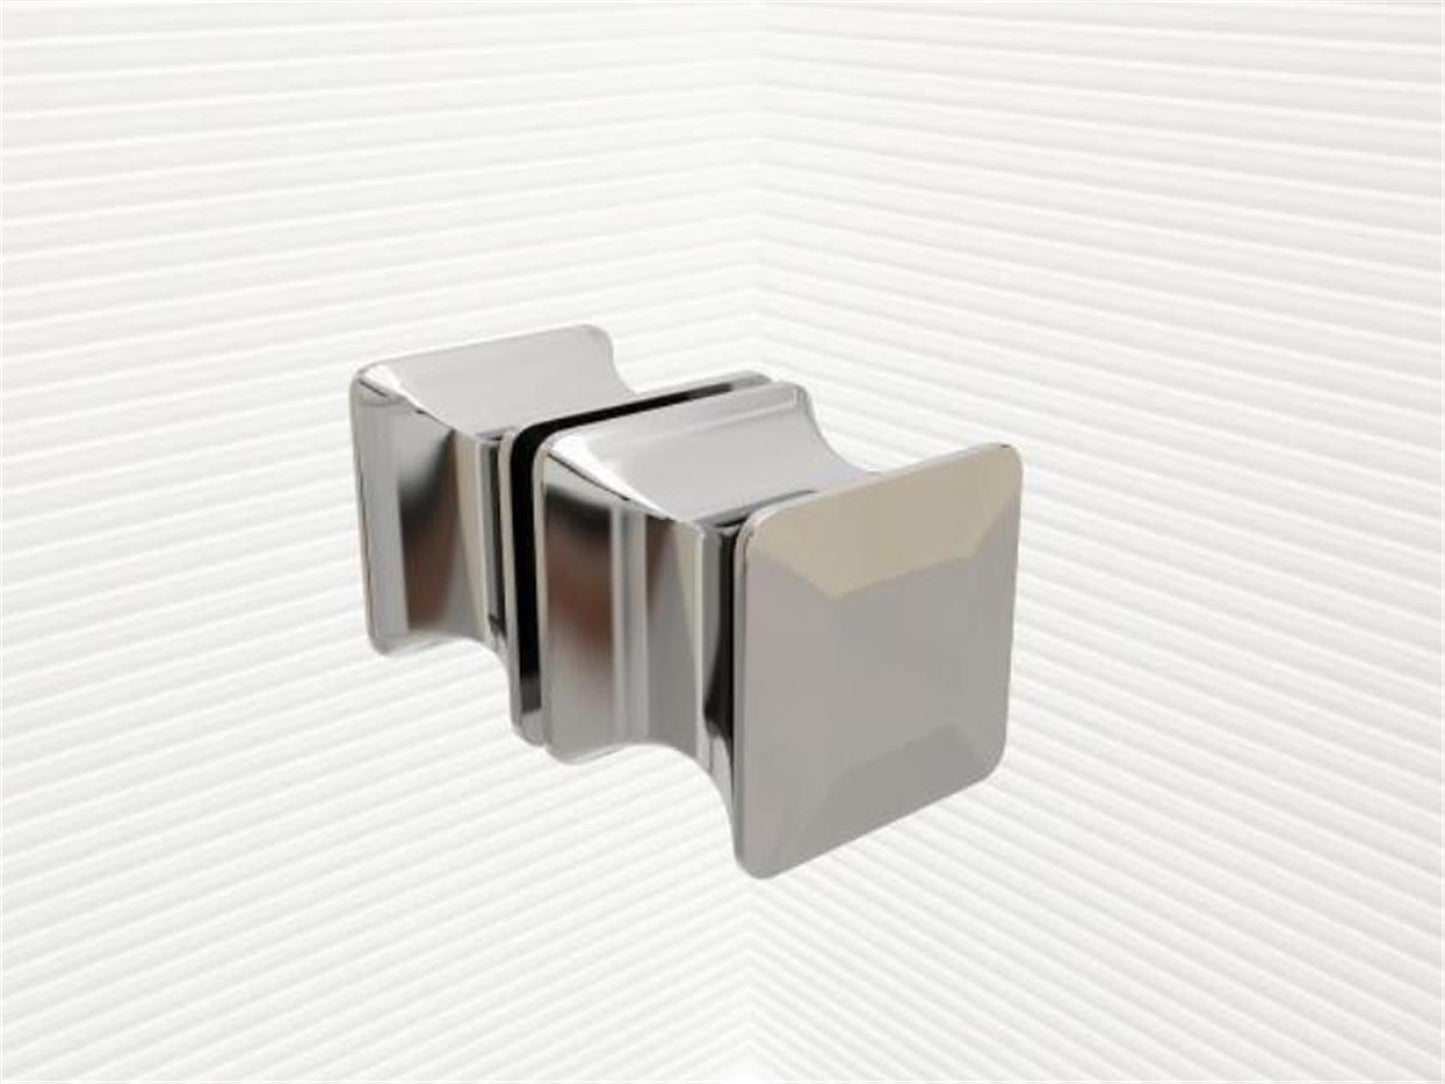 GlasHomeCenter - U-shaped shower cubicle "Asuka" (100x75x180cm) - 8mm - corner shower cubicle - shower partition - without shower tray